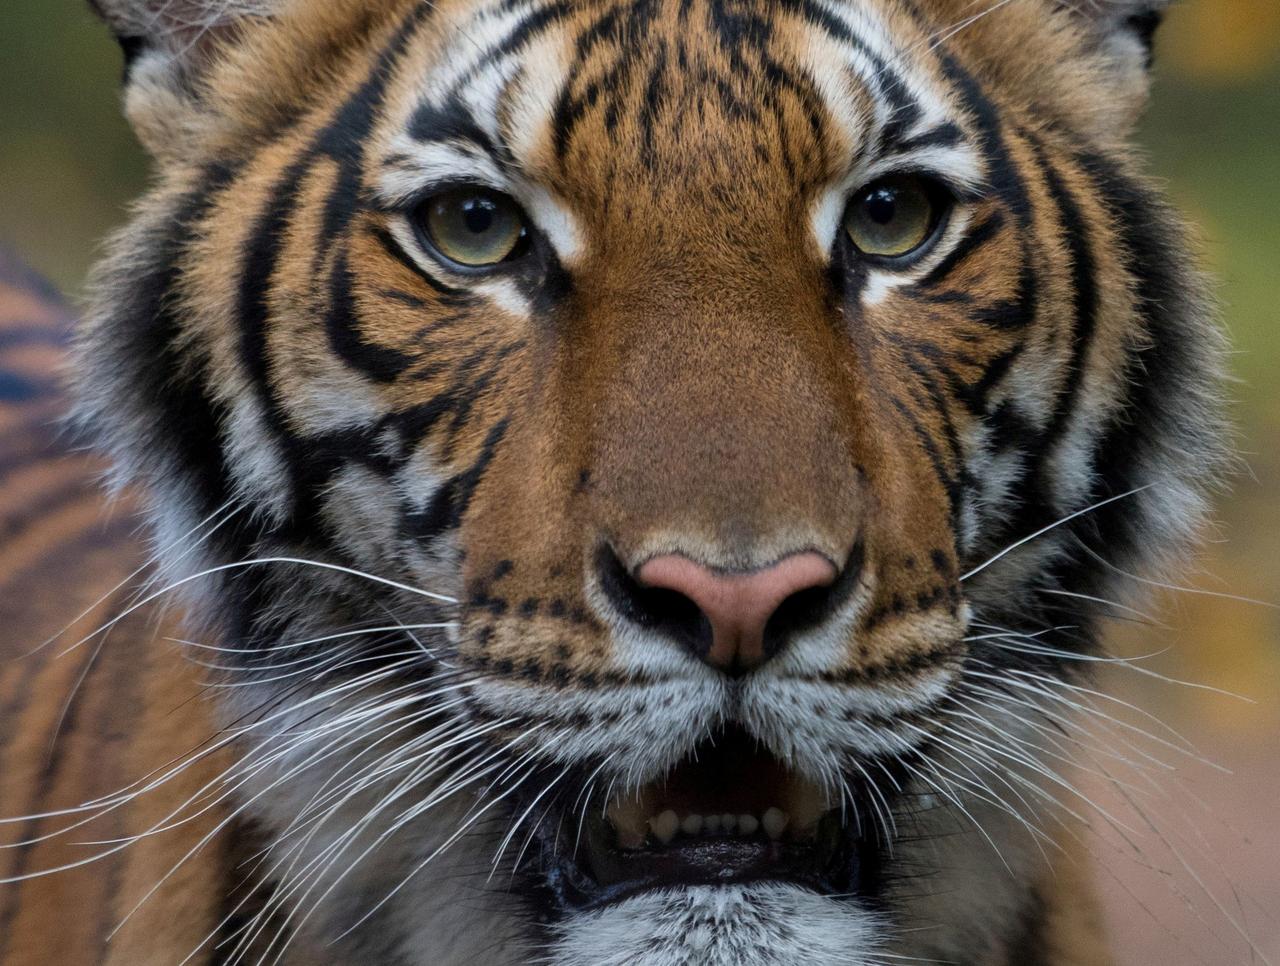 Tiger tests positive for Coronavirus in New York